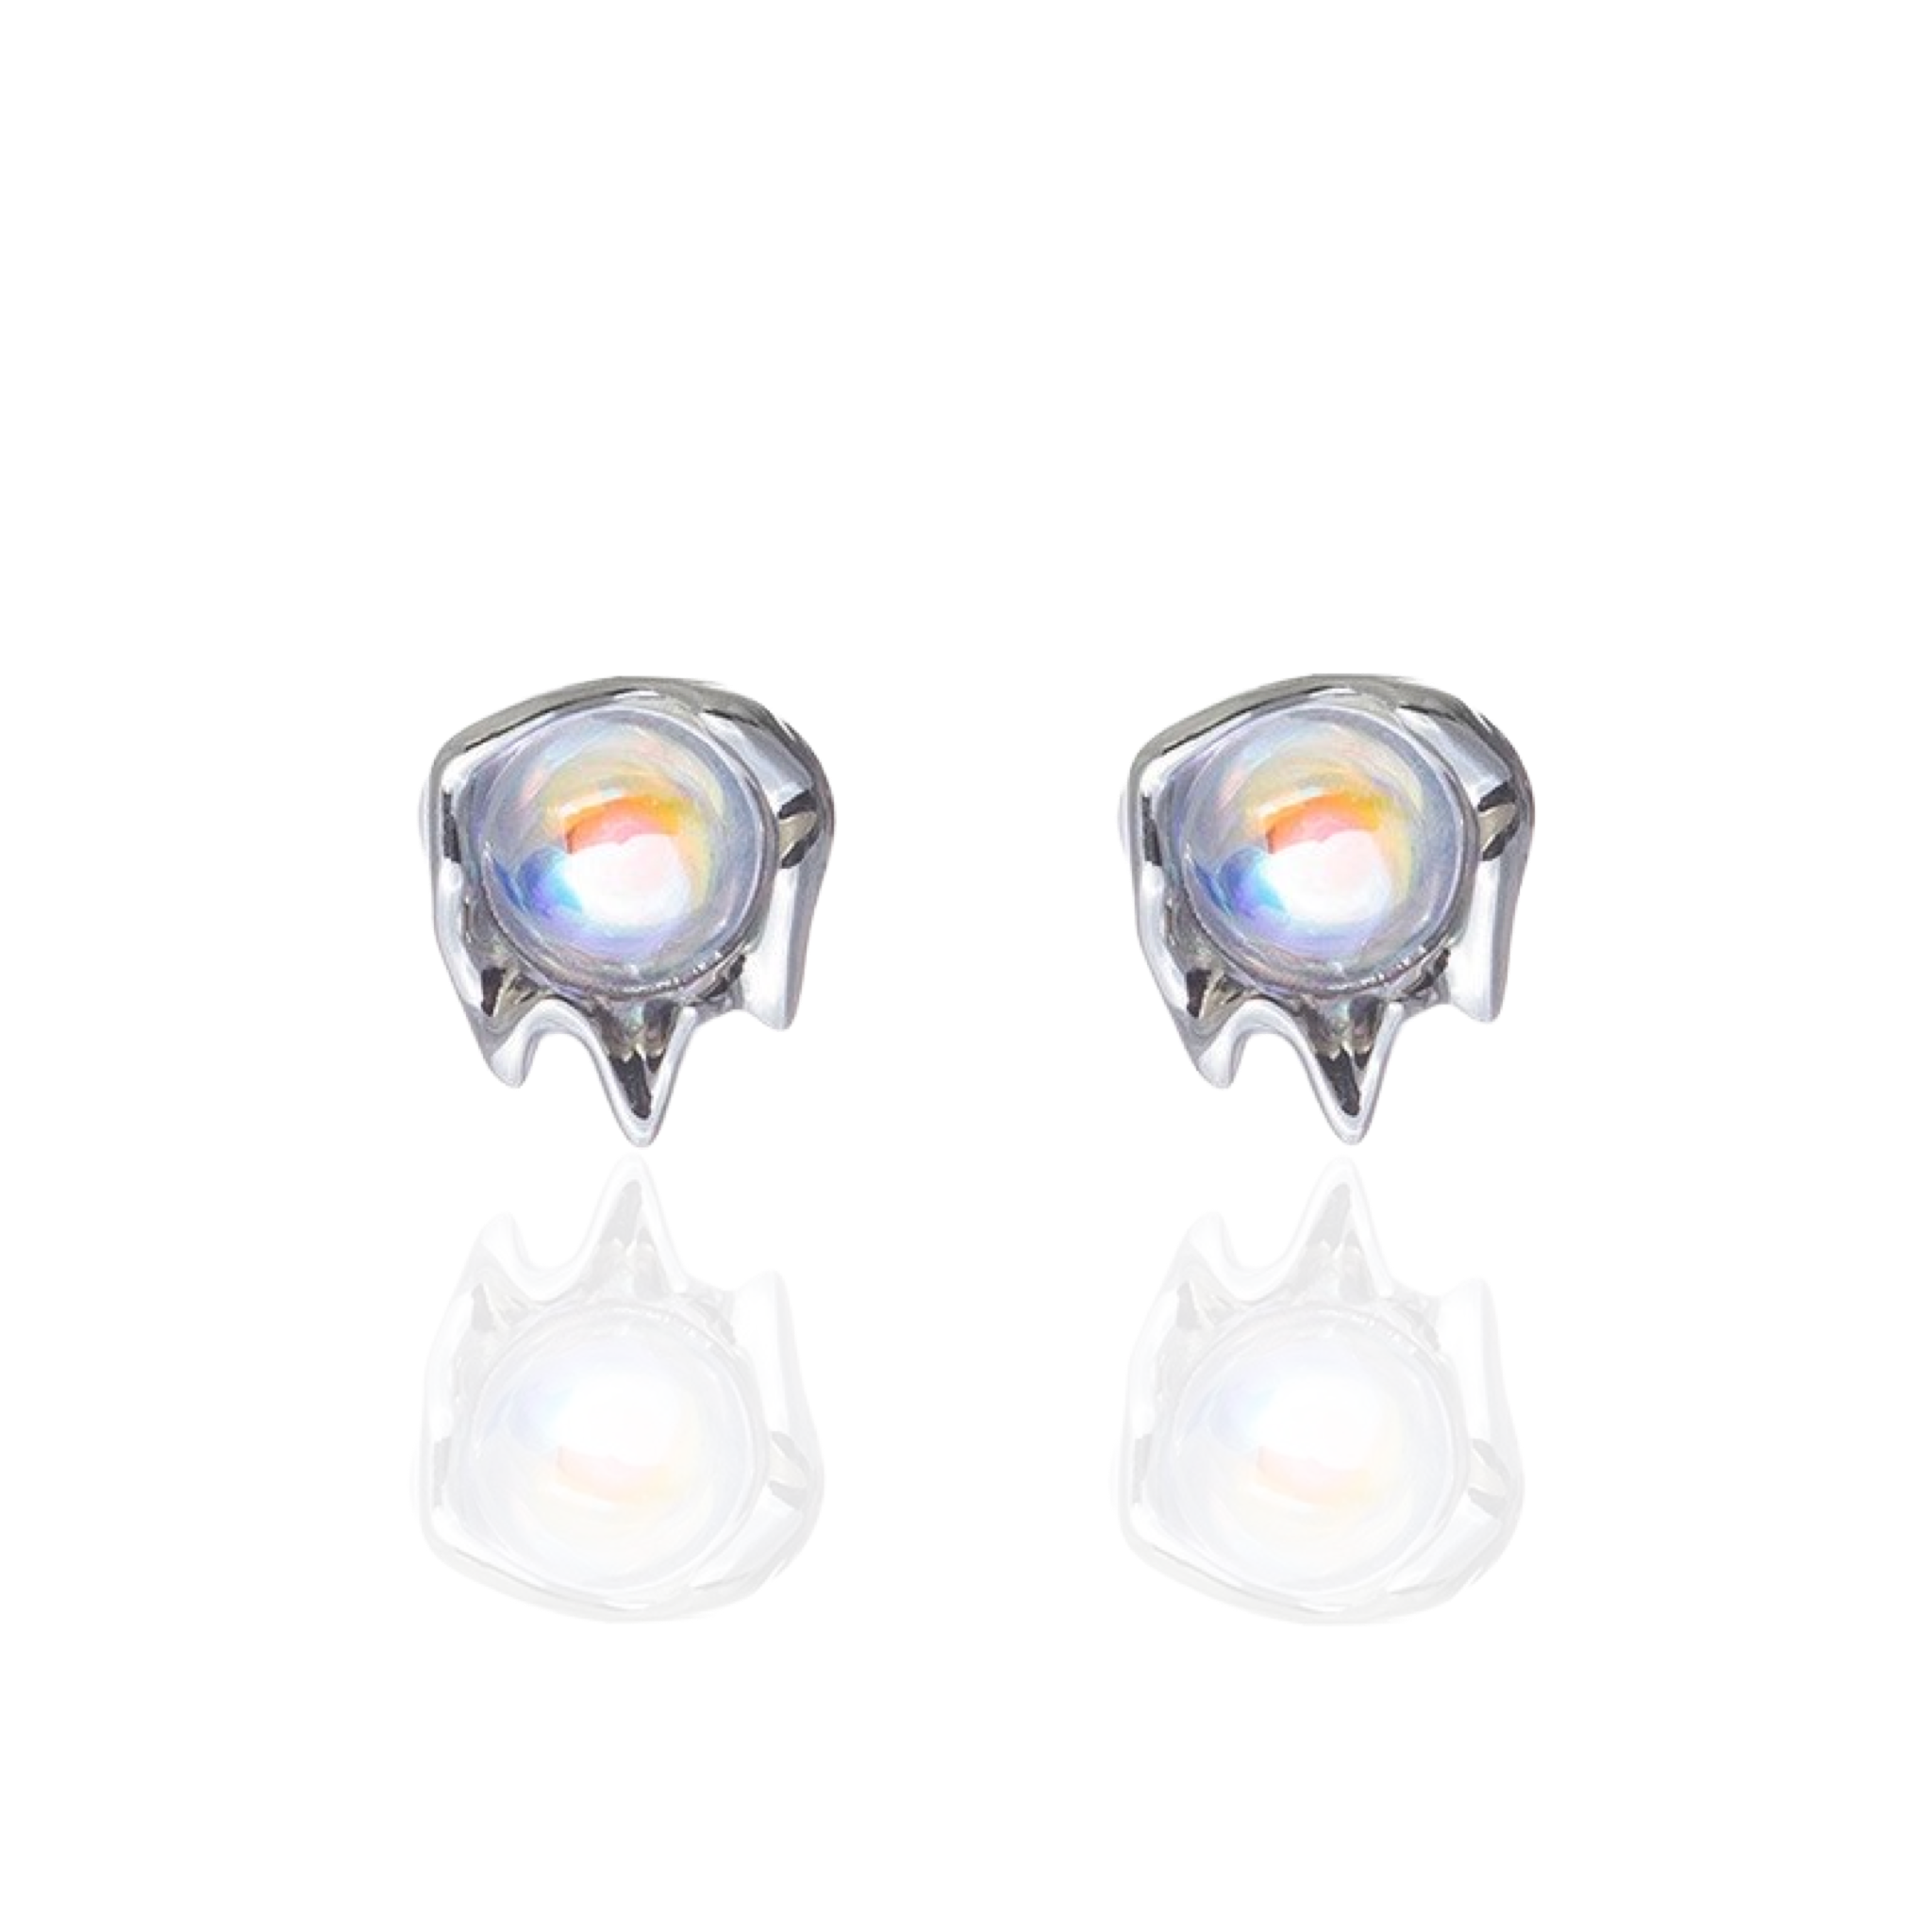 Buy CEYLONMINE- Natural & Beautiful Stud Silver White Moonstone Stud  Earrings For Women & Men Online - Get 62% Off